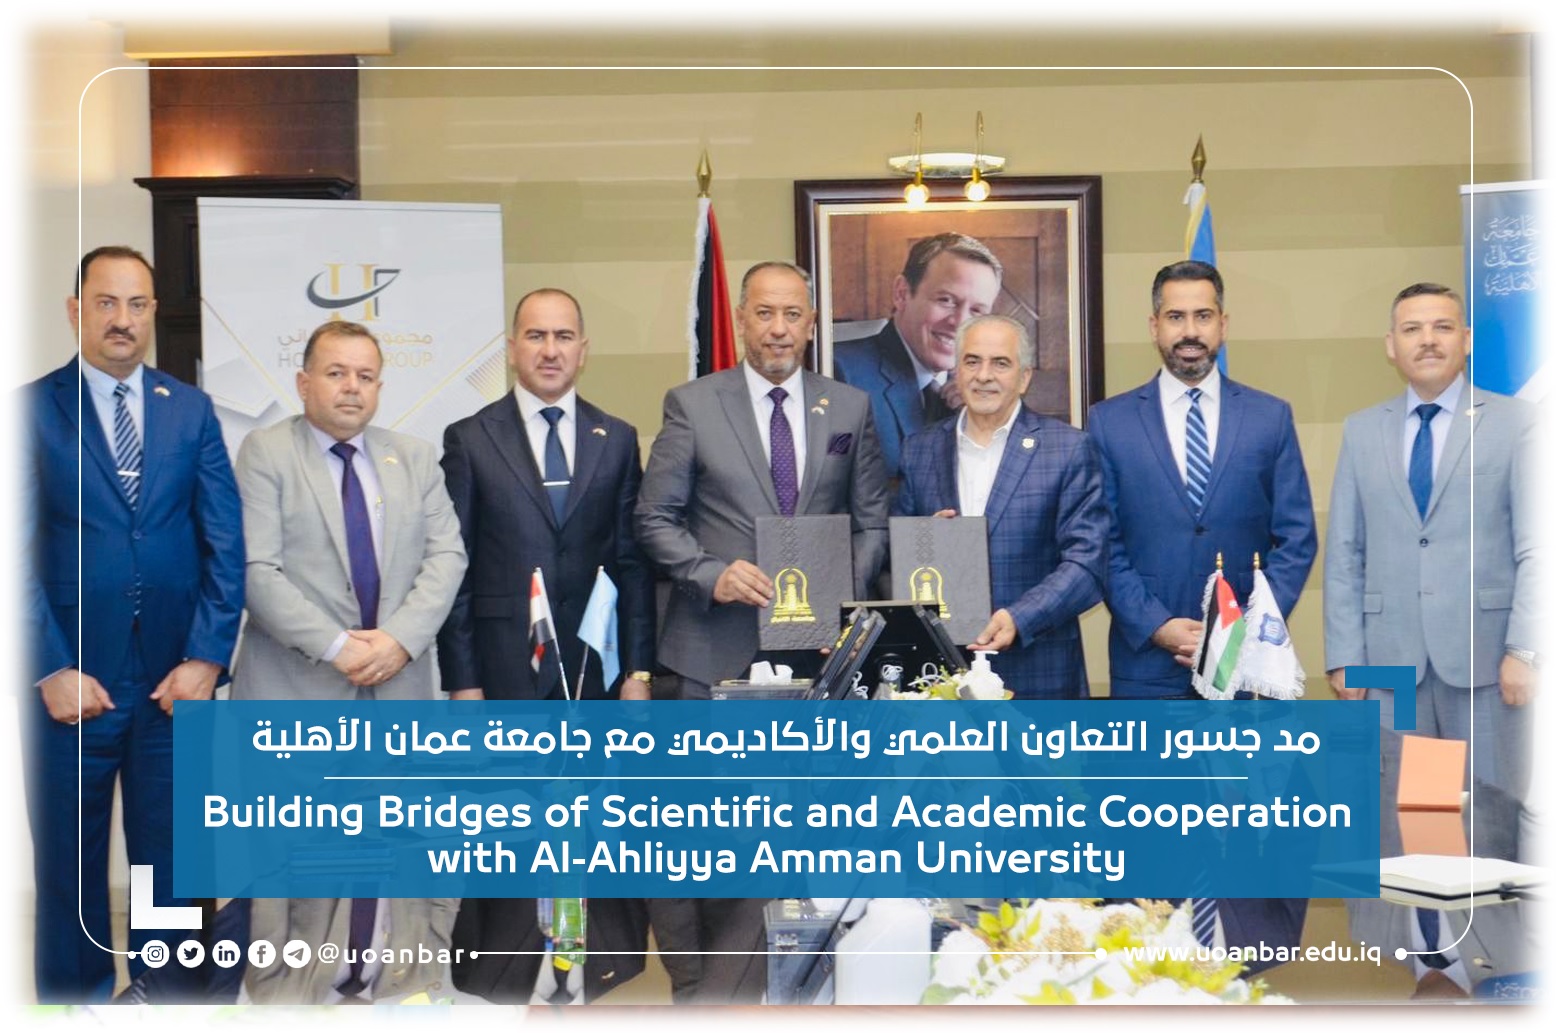 Building Bridges of Scientific and Academic Cooperation with Al-Ahliyya Amman University